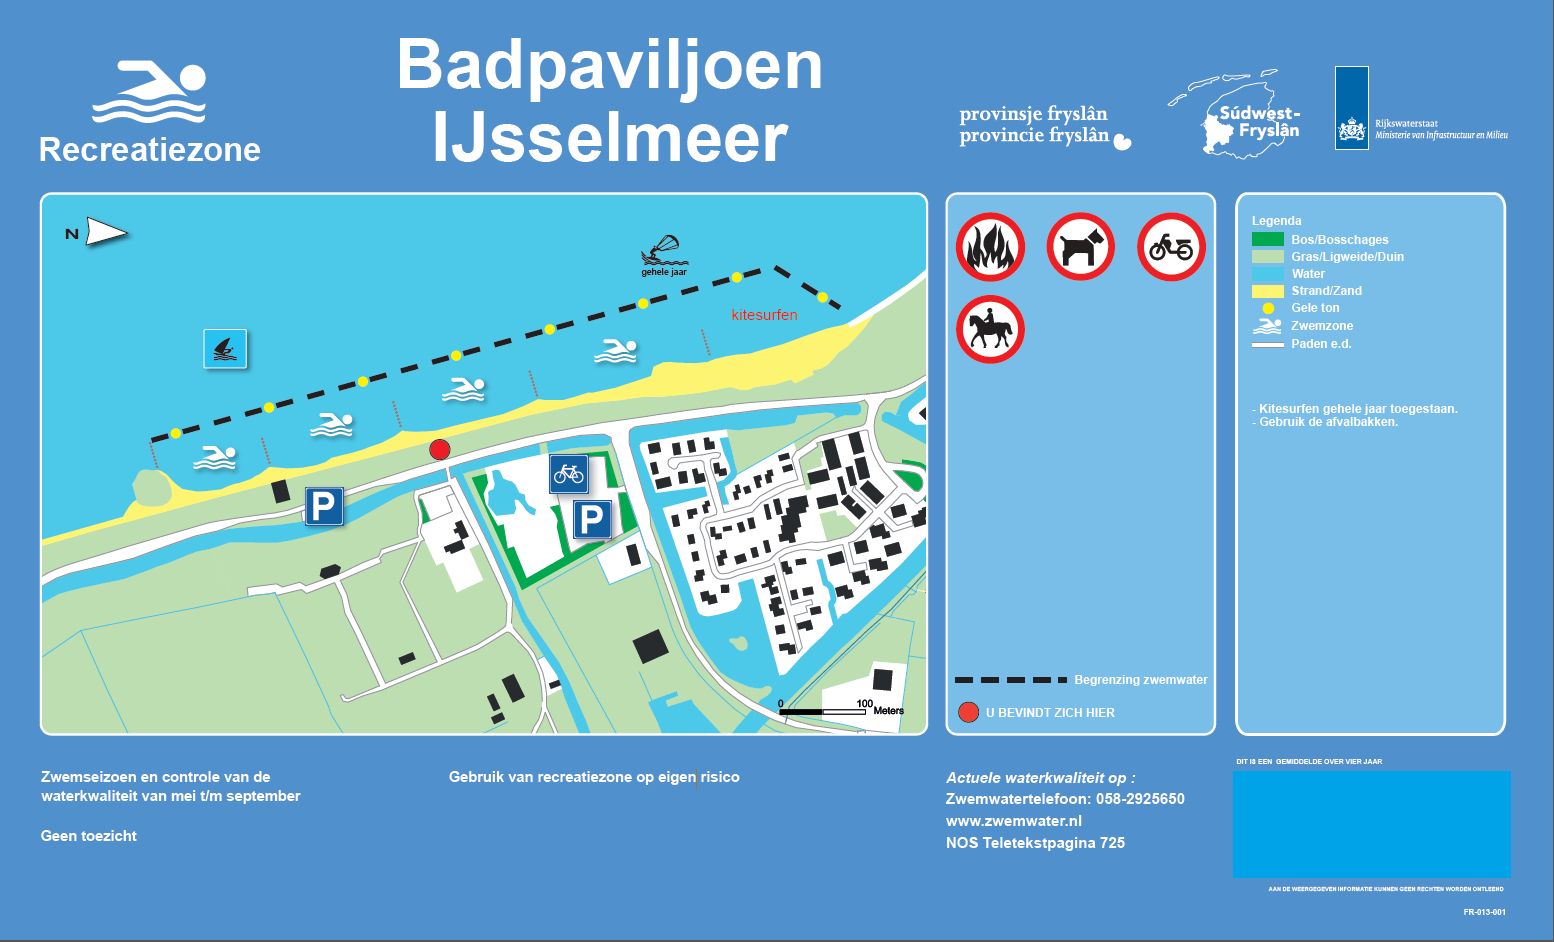 The information board at the swimming location Badpaviljoen IJsselmeer